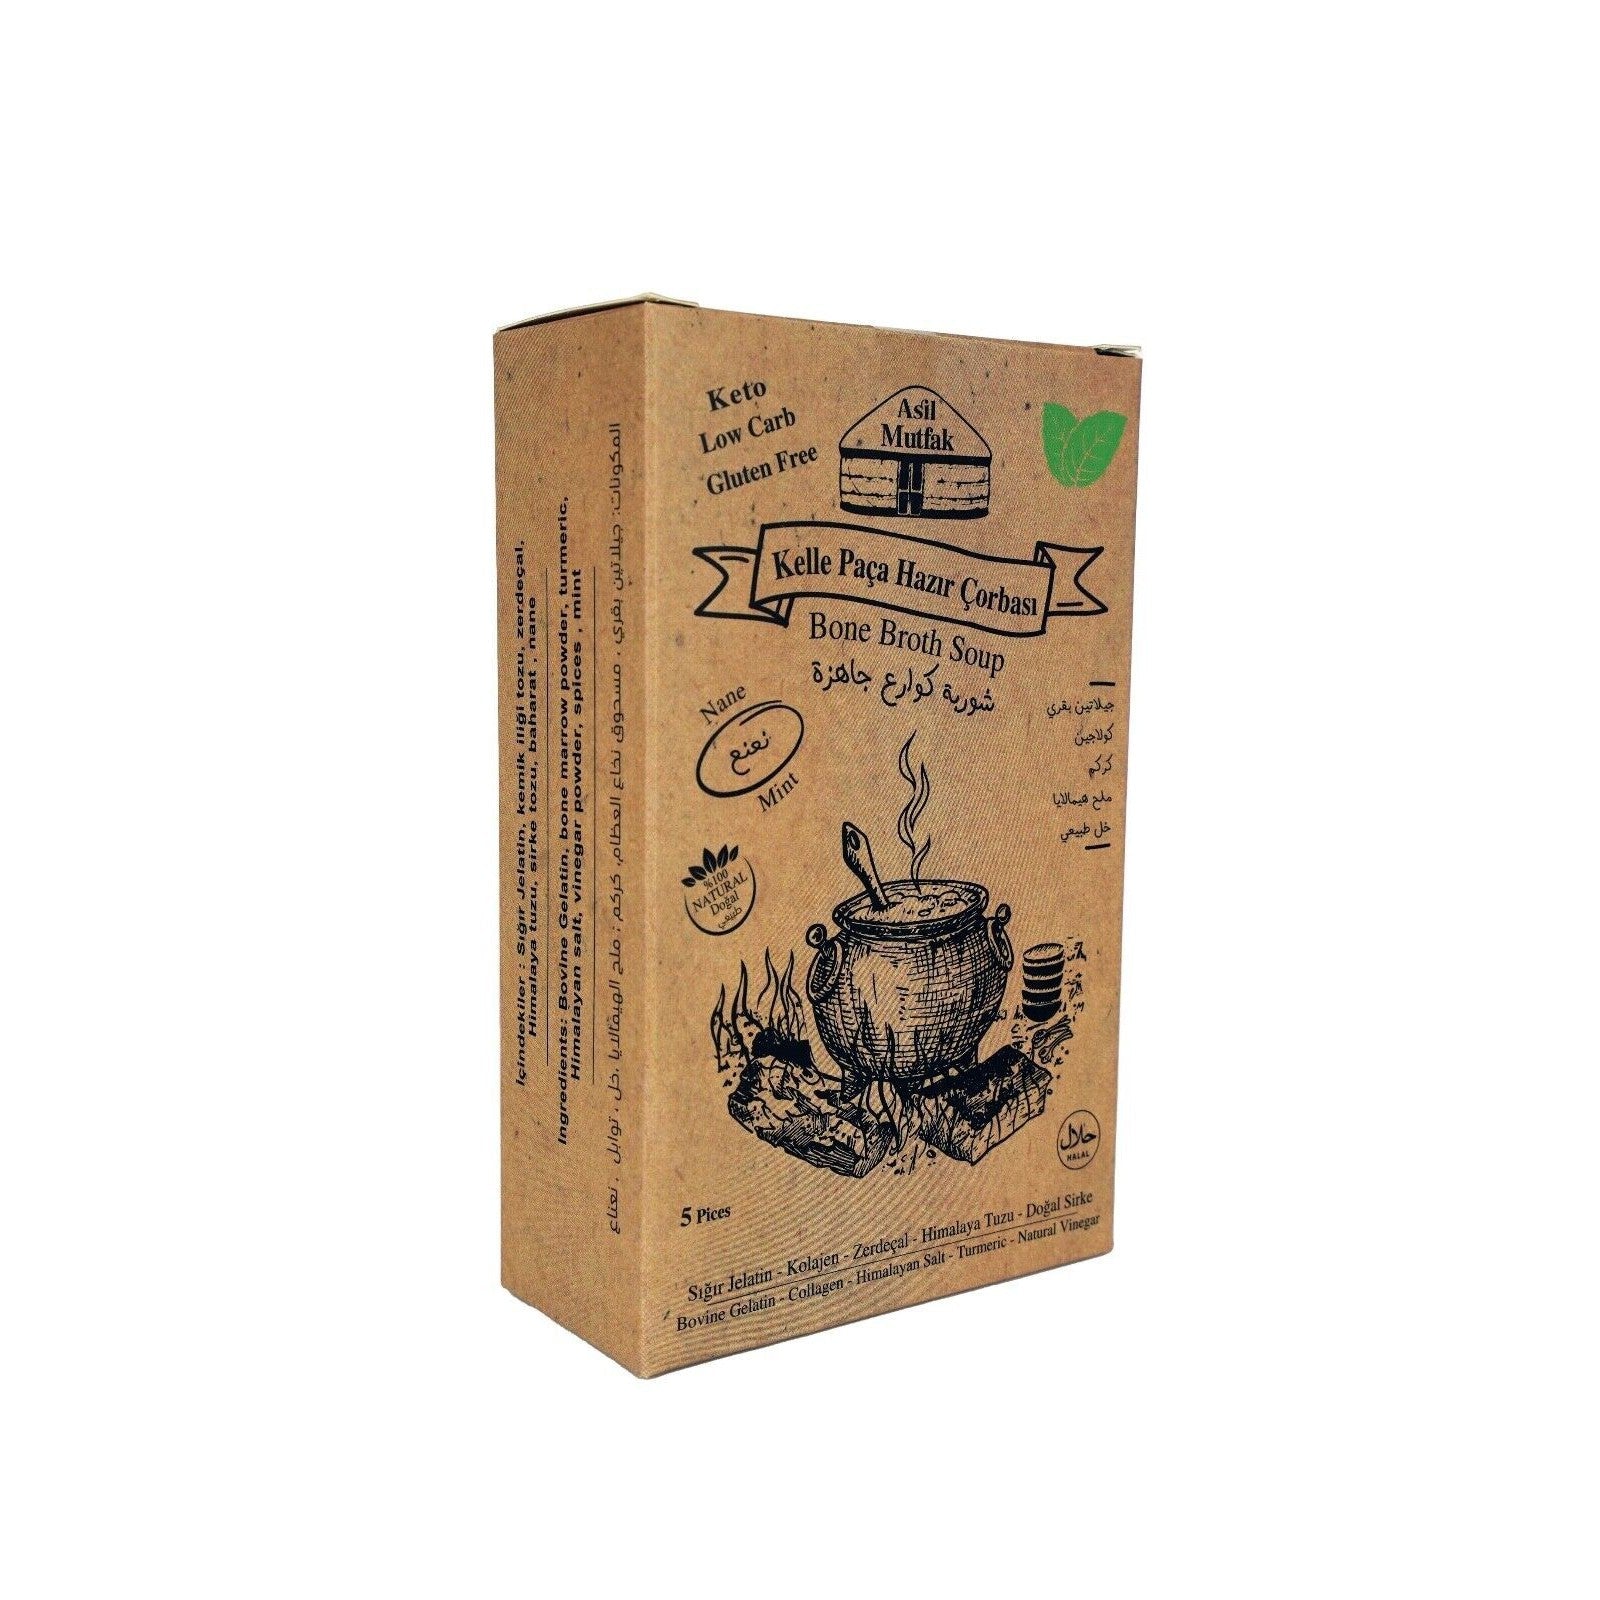 Asil Mutfak Bone Broth Soup Mint 100% Natural Collagen Halal Certified Gluten Free Keto Low Carb 5 Packets